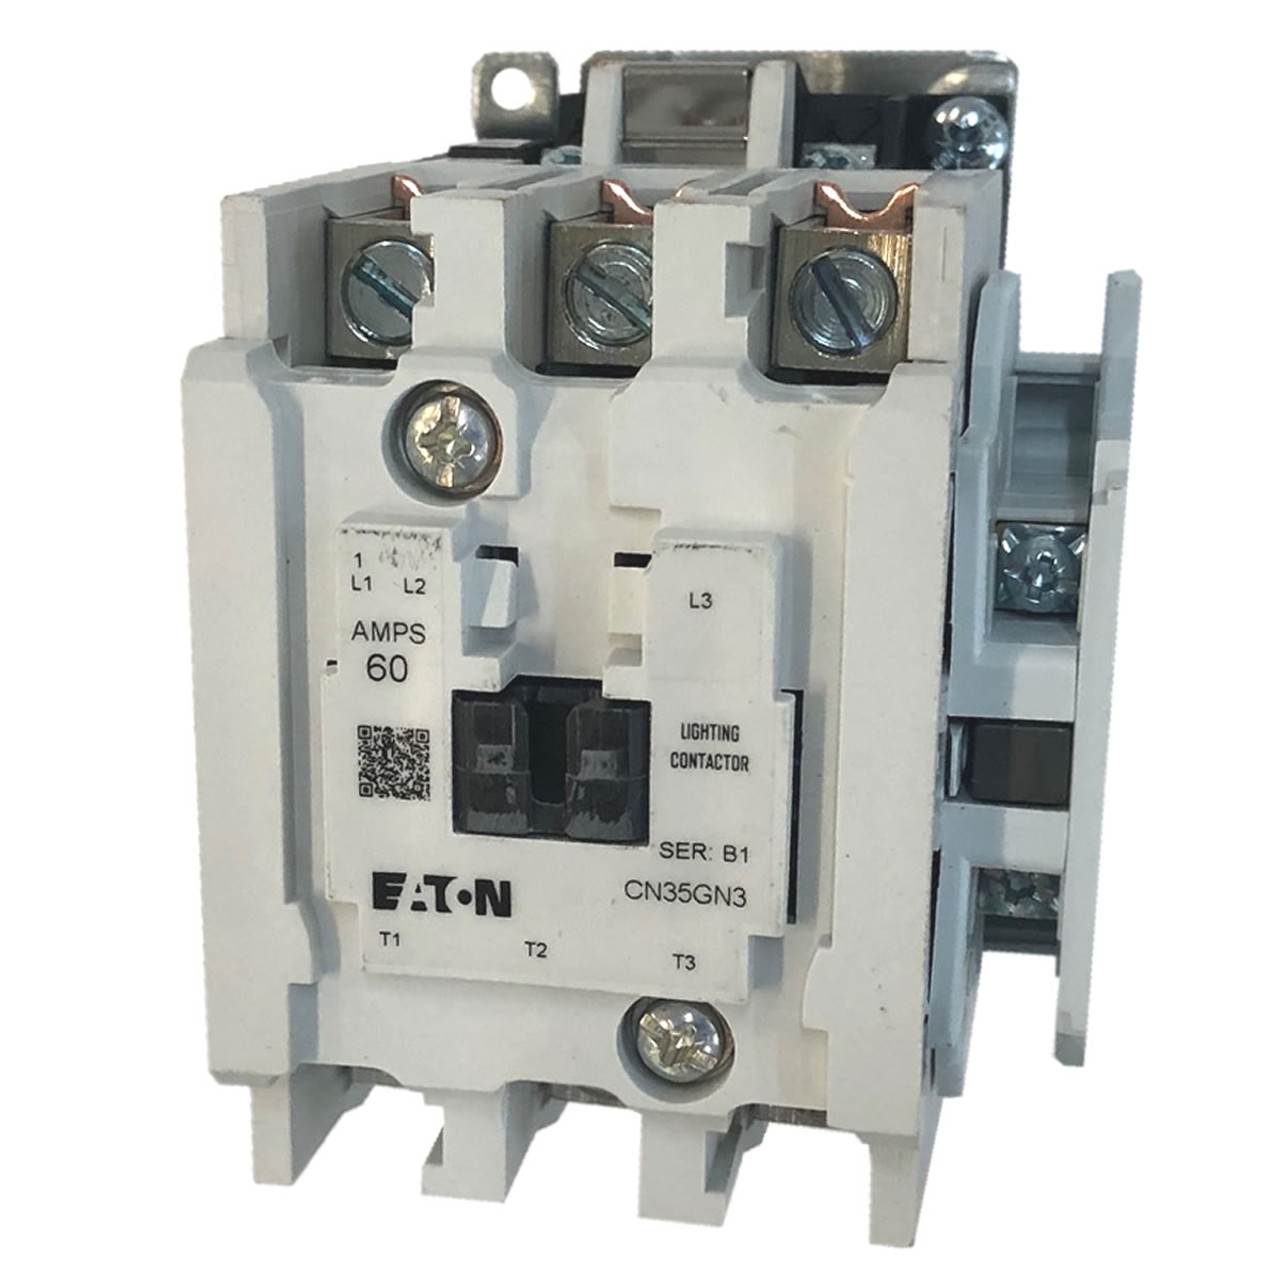 Eaton CN35GN3EB lighting contactor